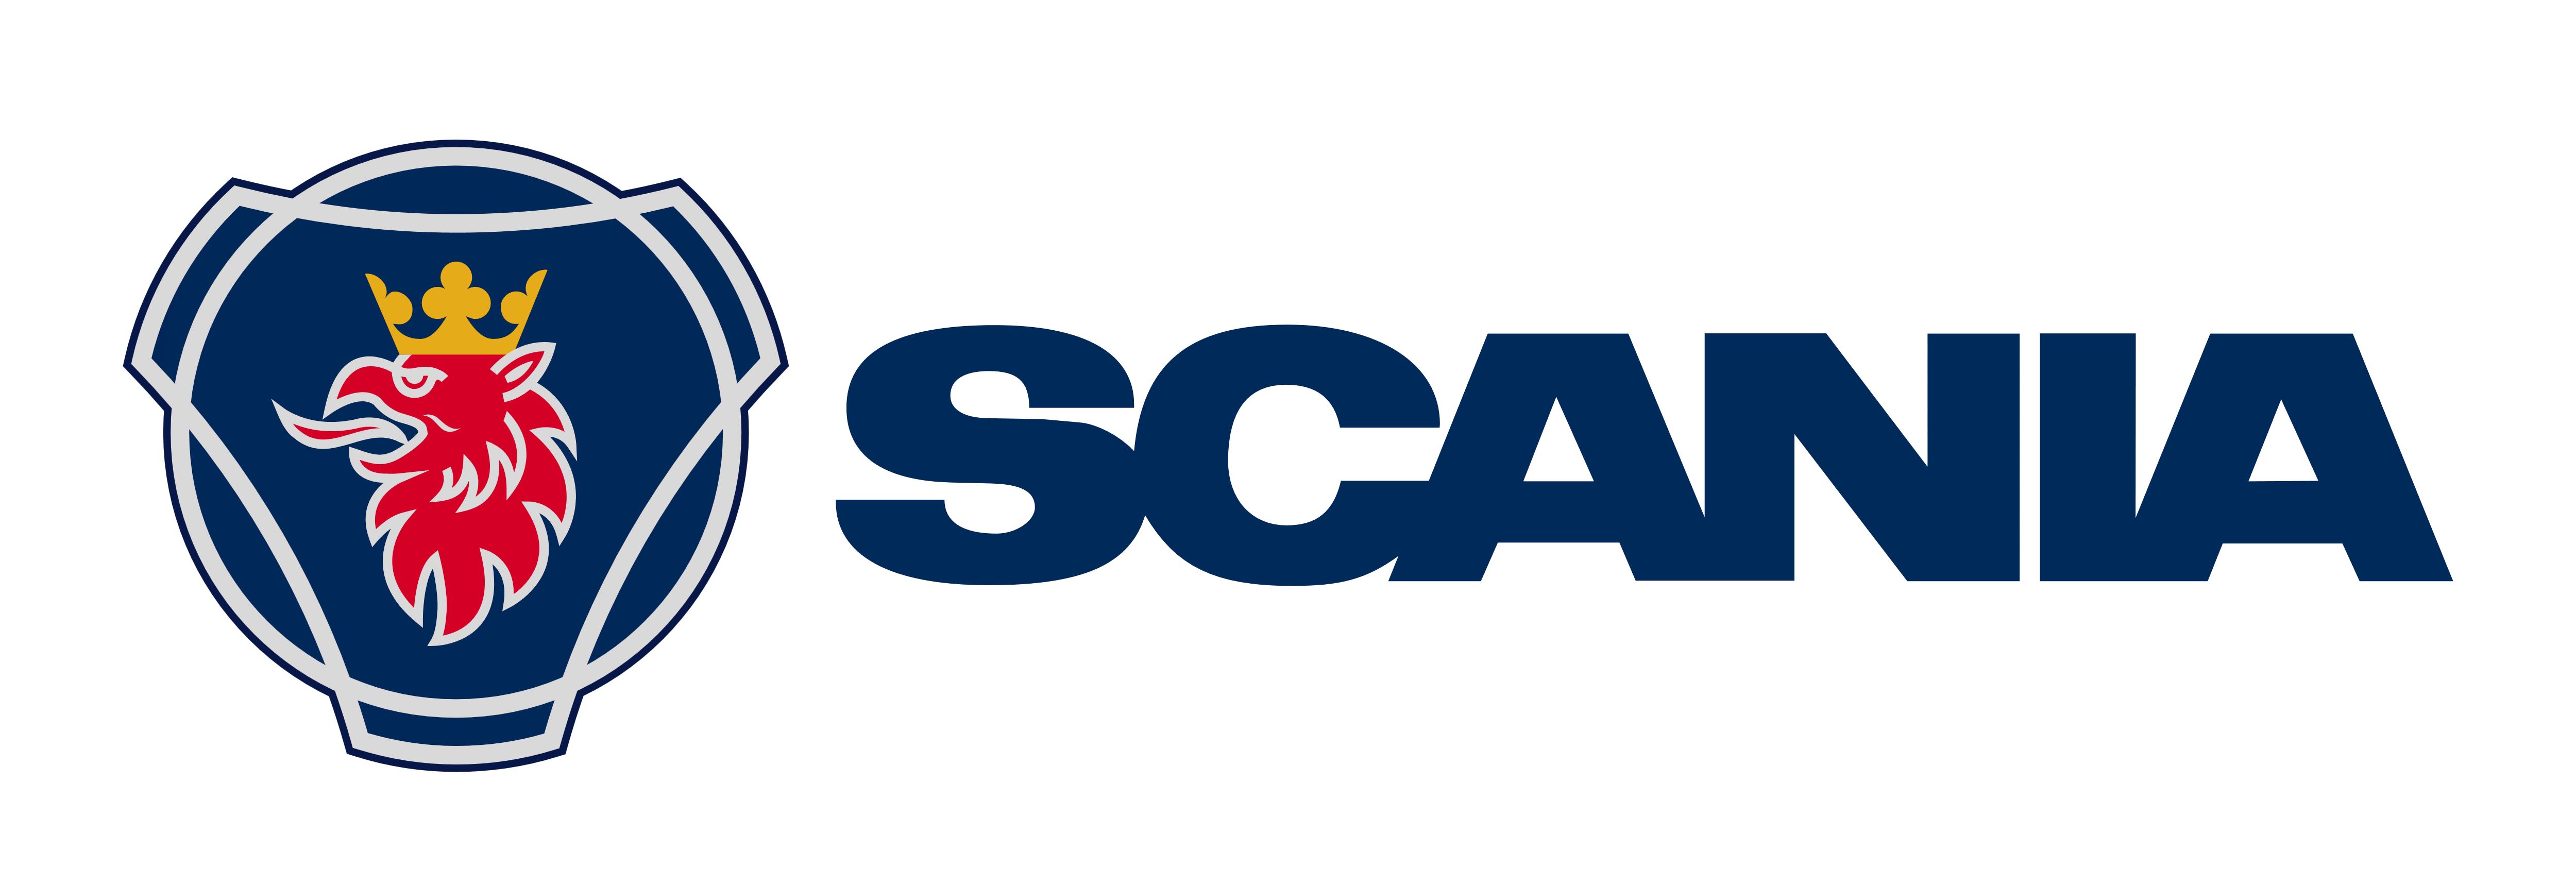 Scania Logo PNG - 178923